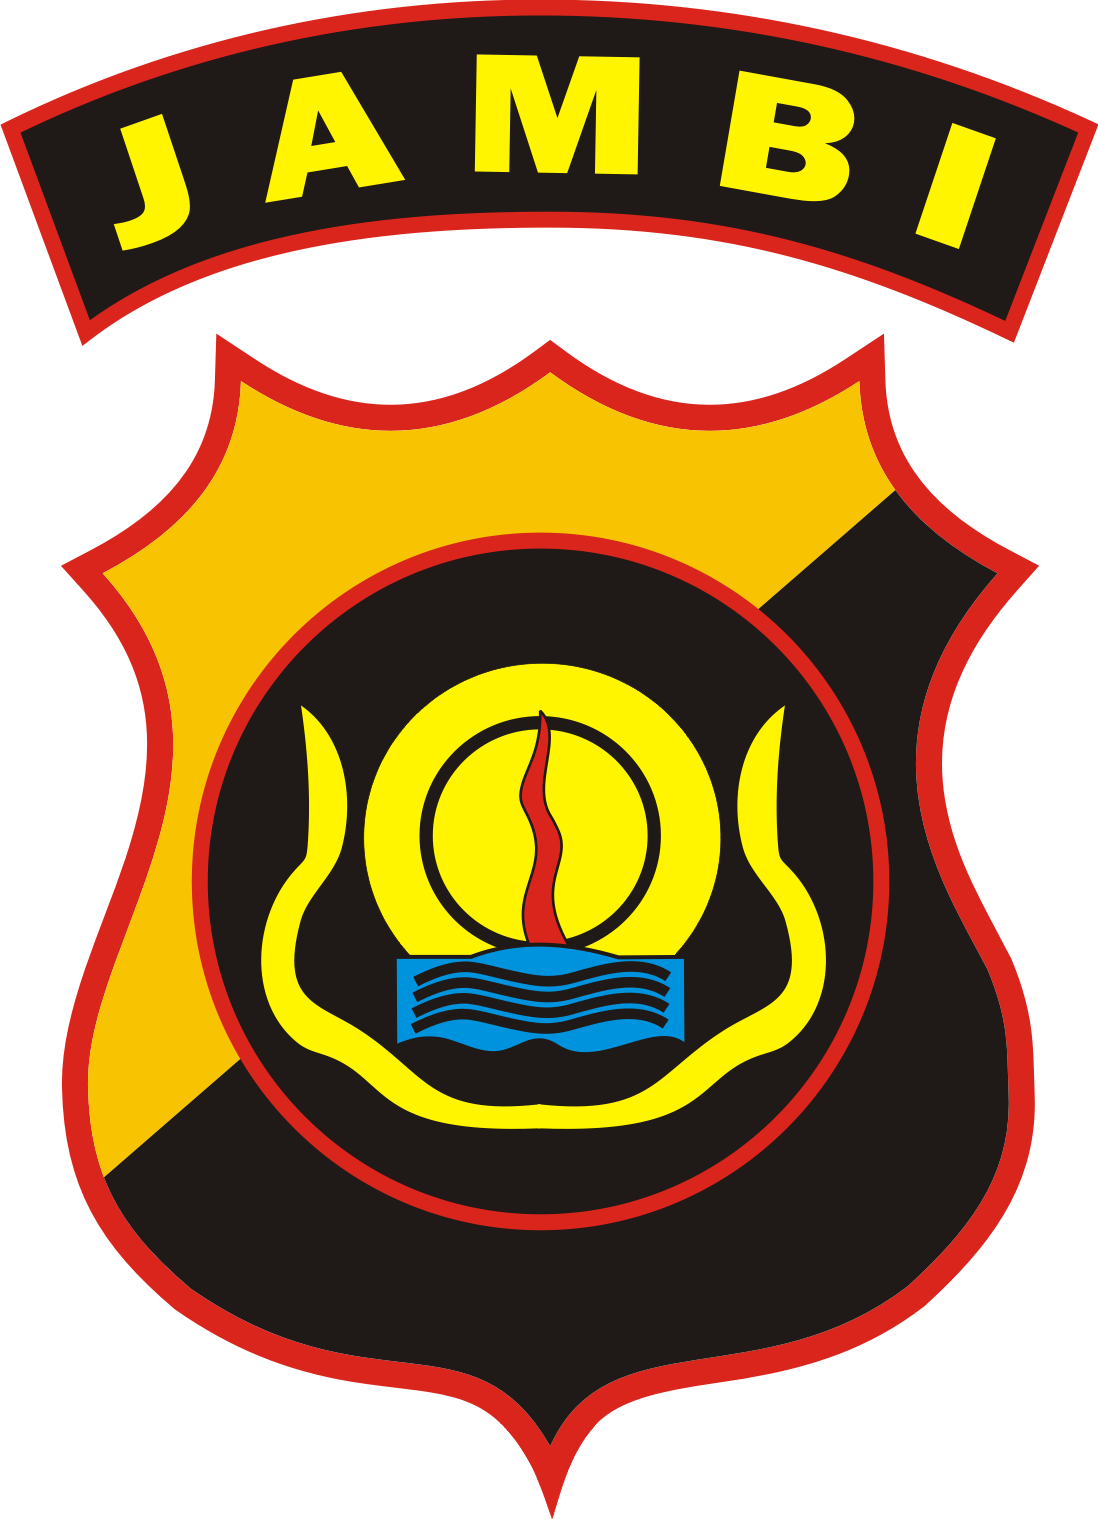 Logo Polda Jambi Kumpulan Logo Indonesia 